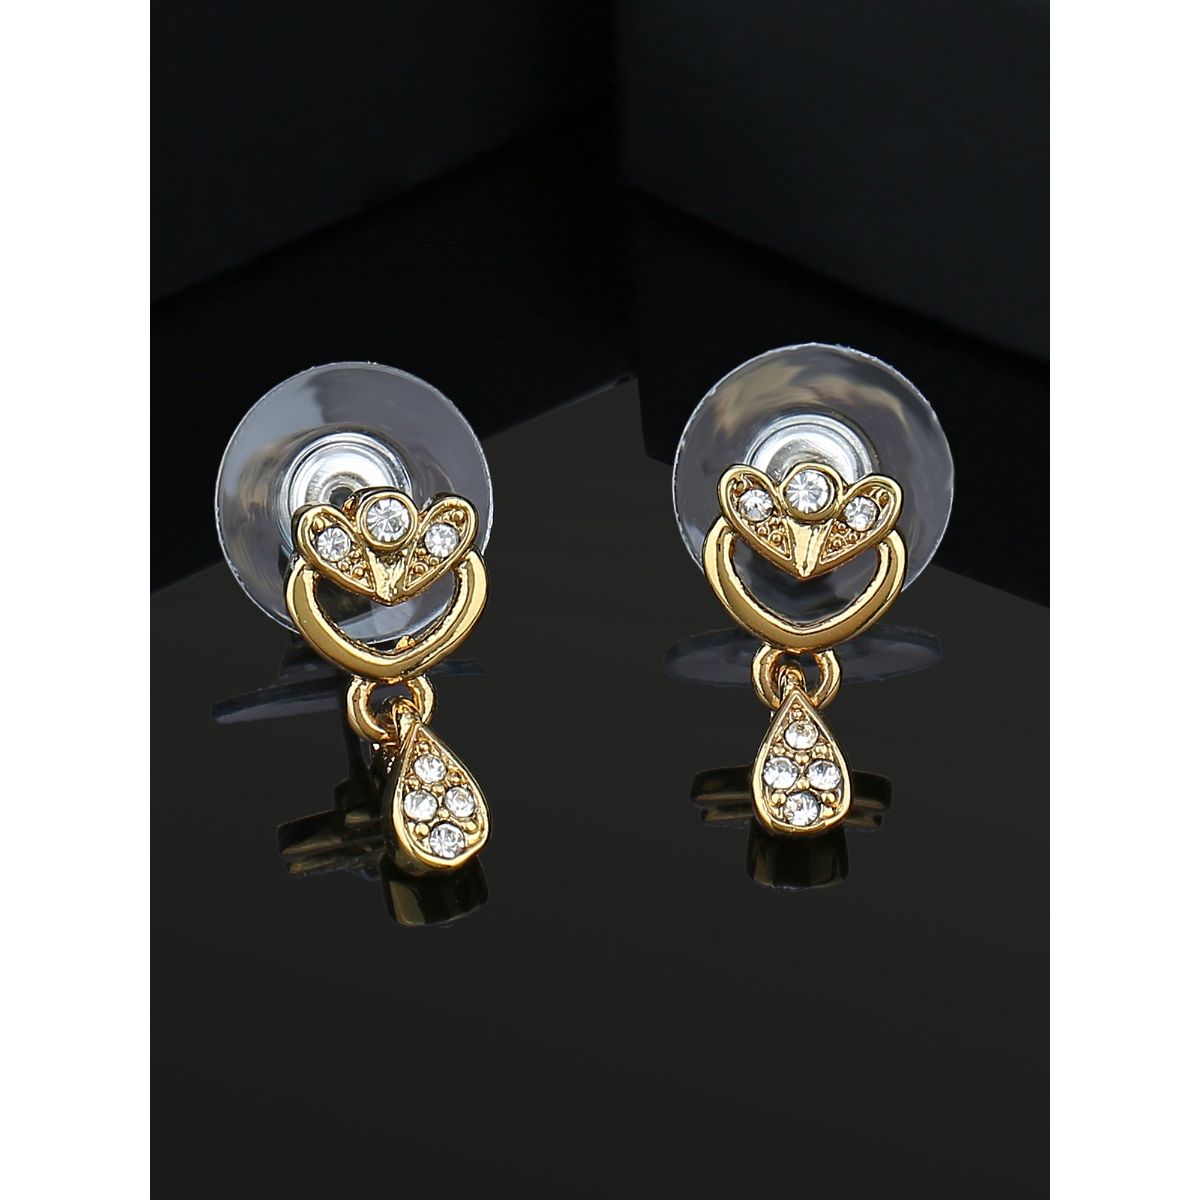 Estele Gold Plated Gorgeous Earrings For Women: Buy Estele Gold